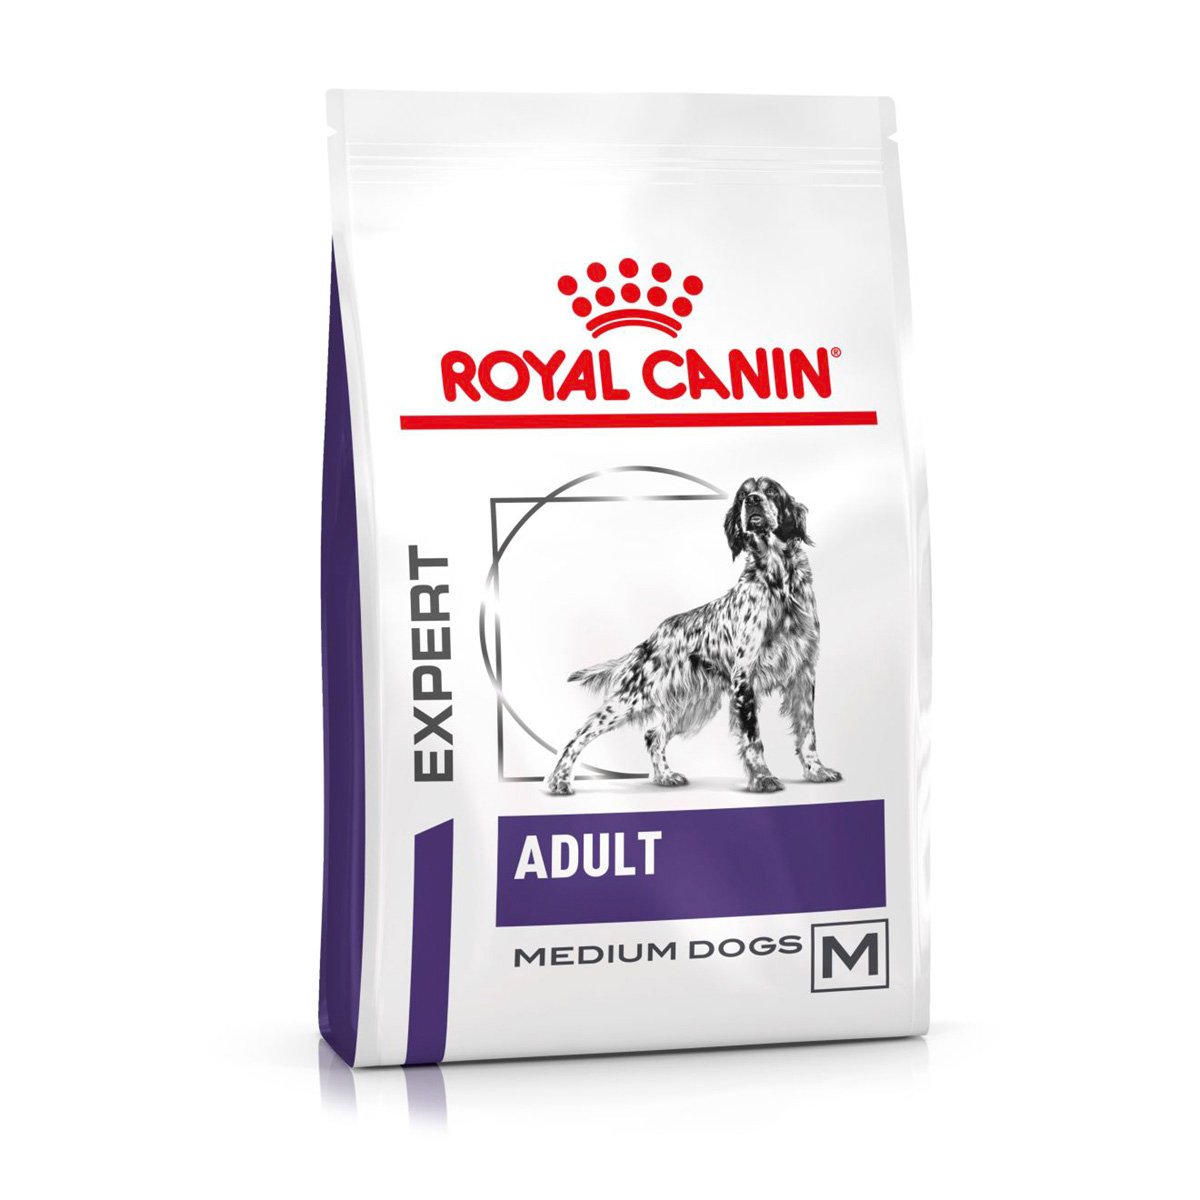 ROYAL CANIN® Expert ADULT MEDIUM DOGS Trockenfutter für Hunde 10kg von Royal Canin